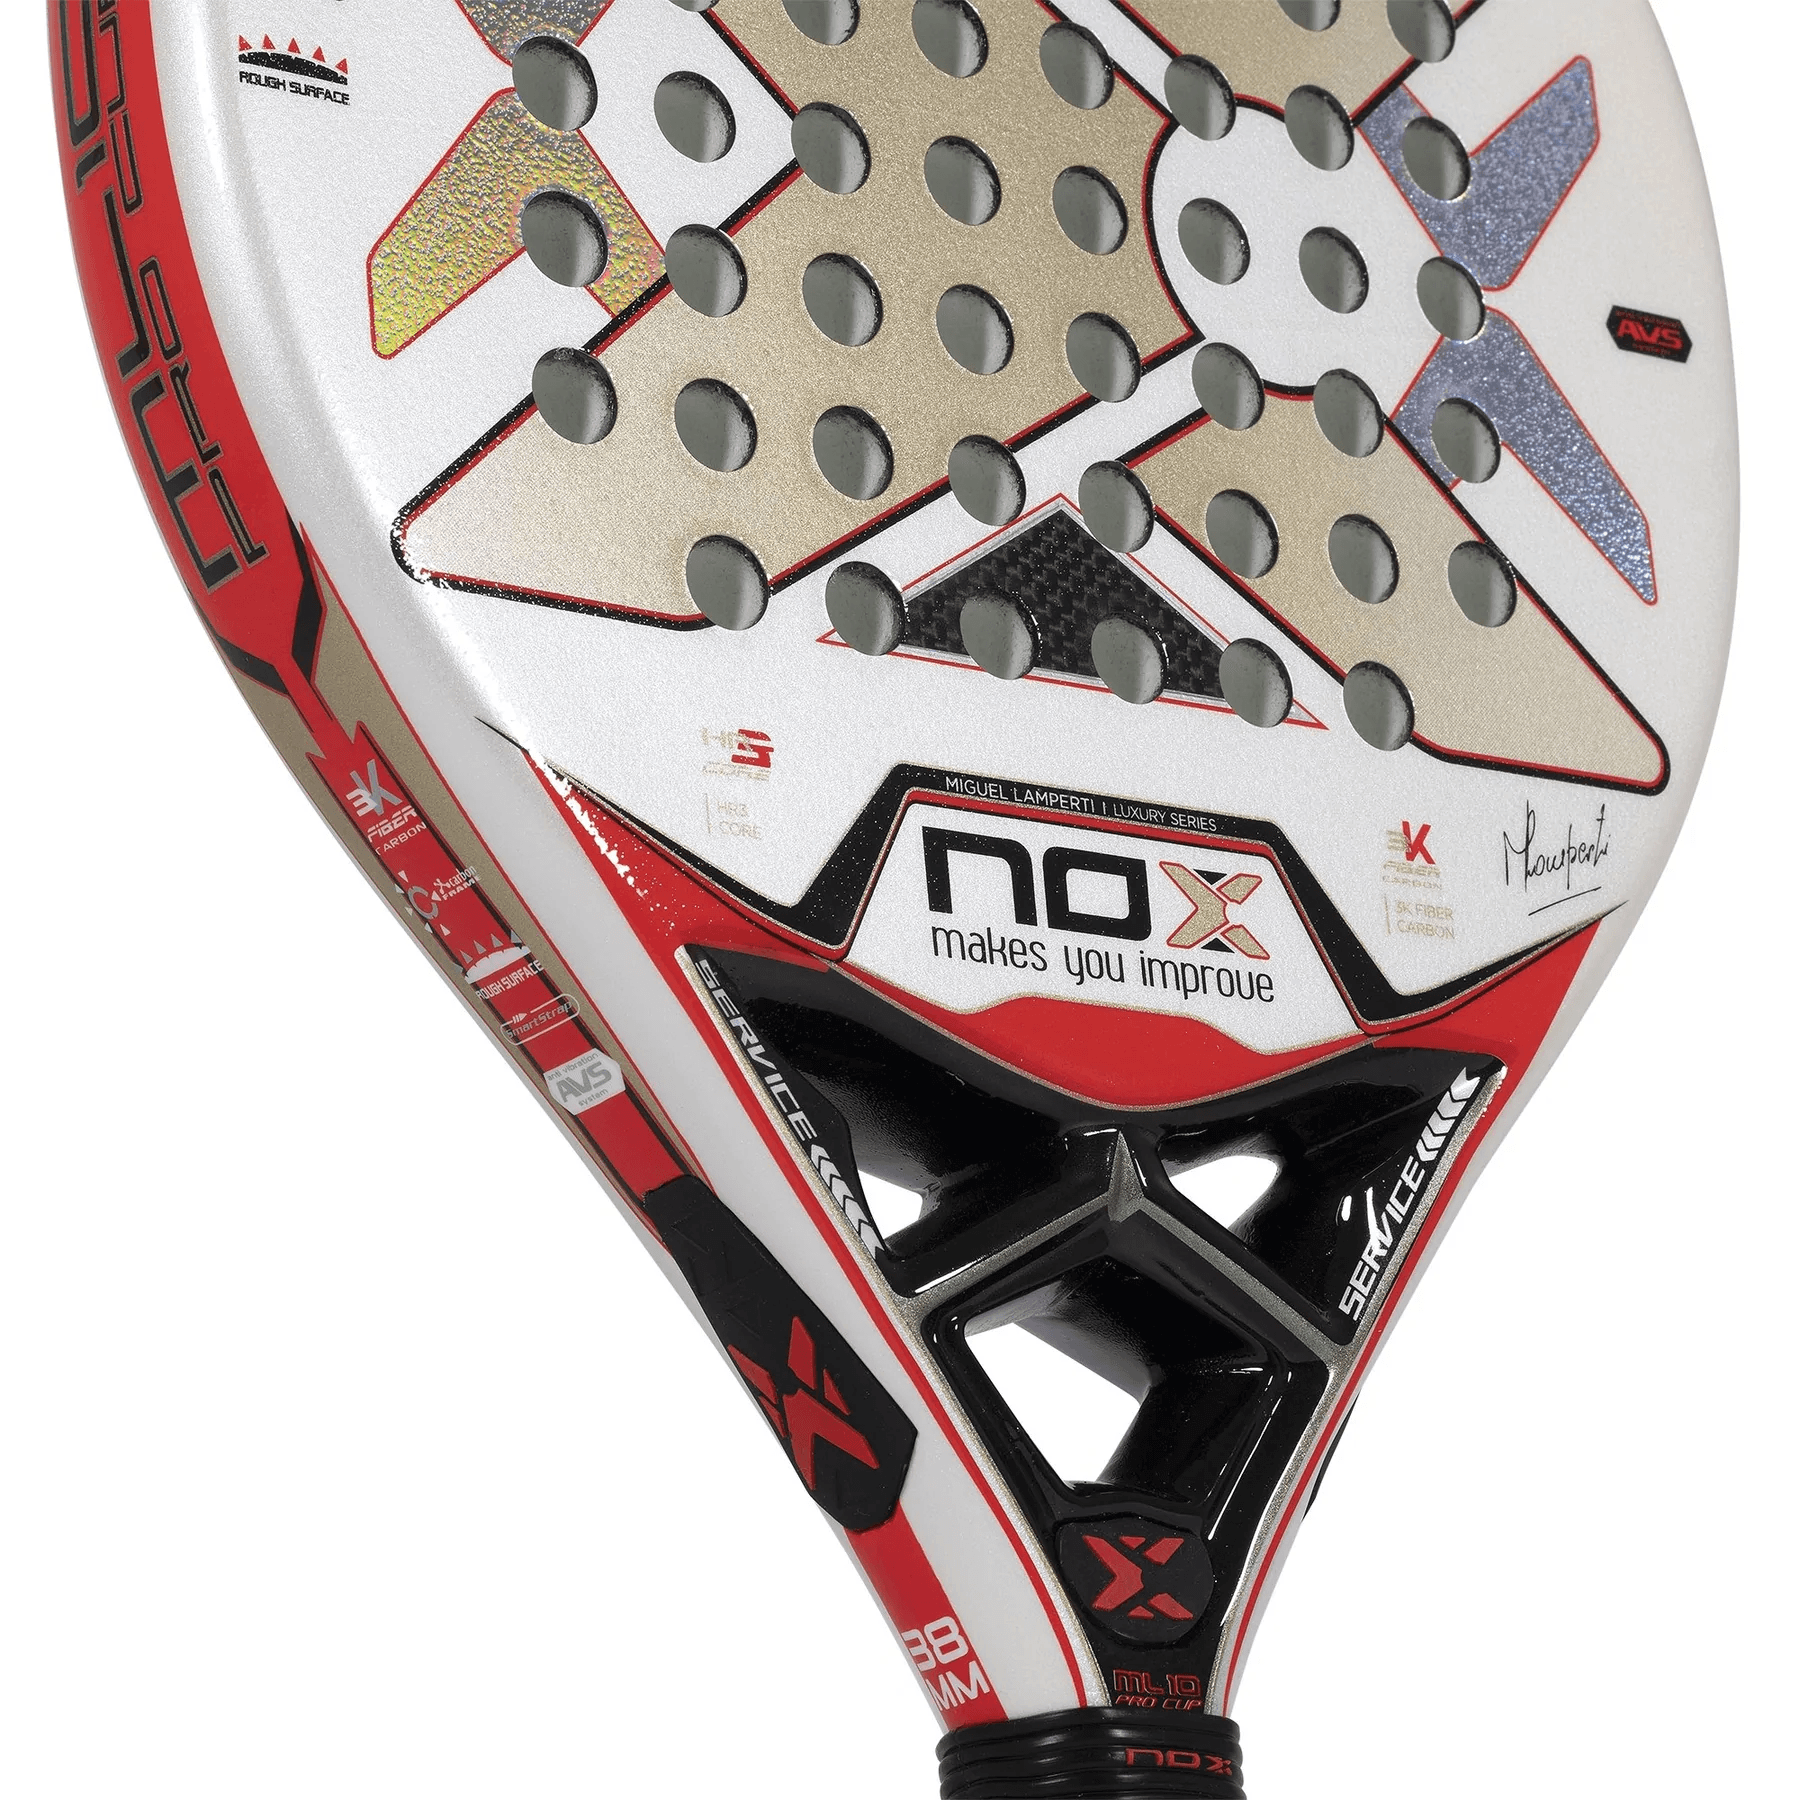 Nox Padel Racket ML10 Pro Cup